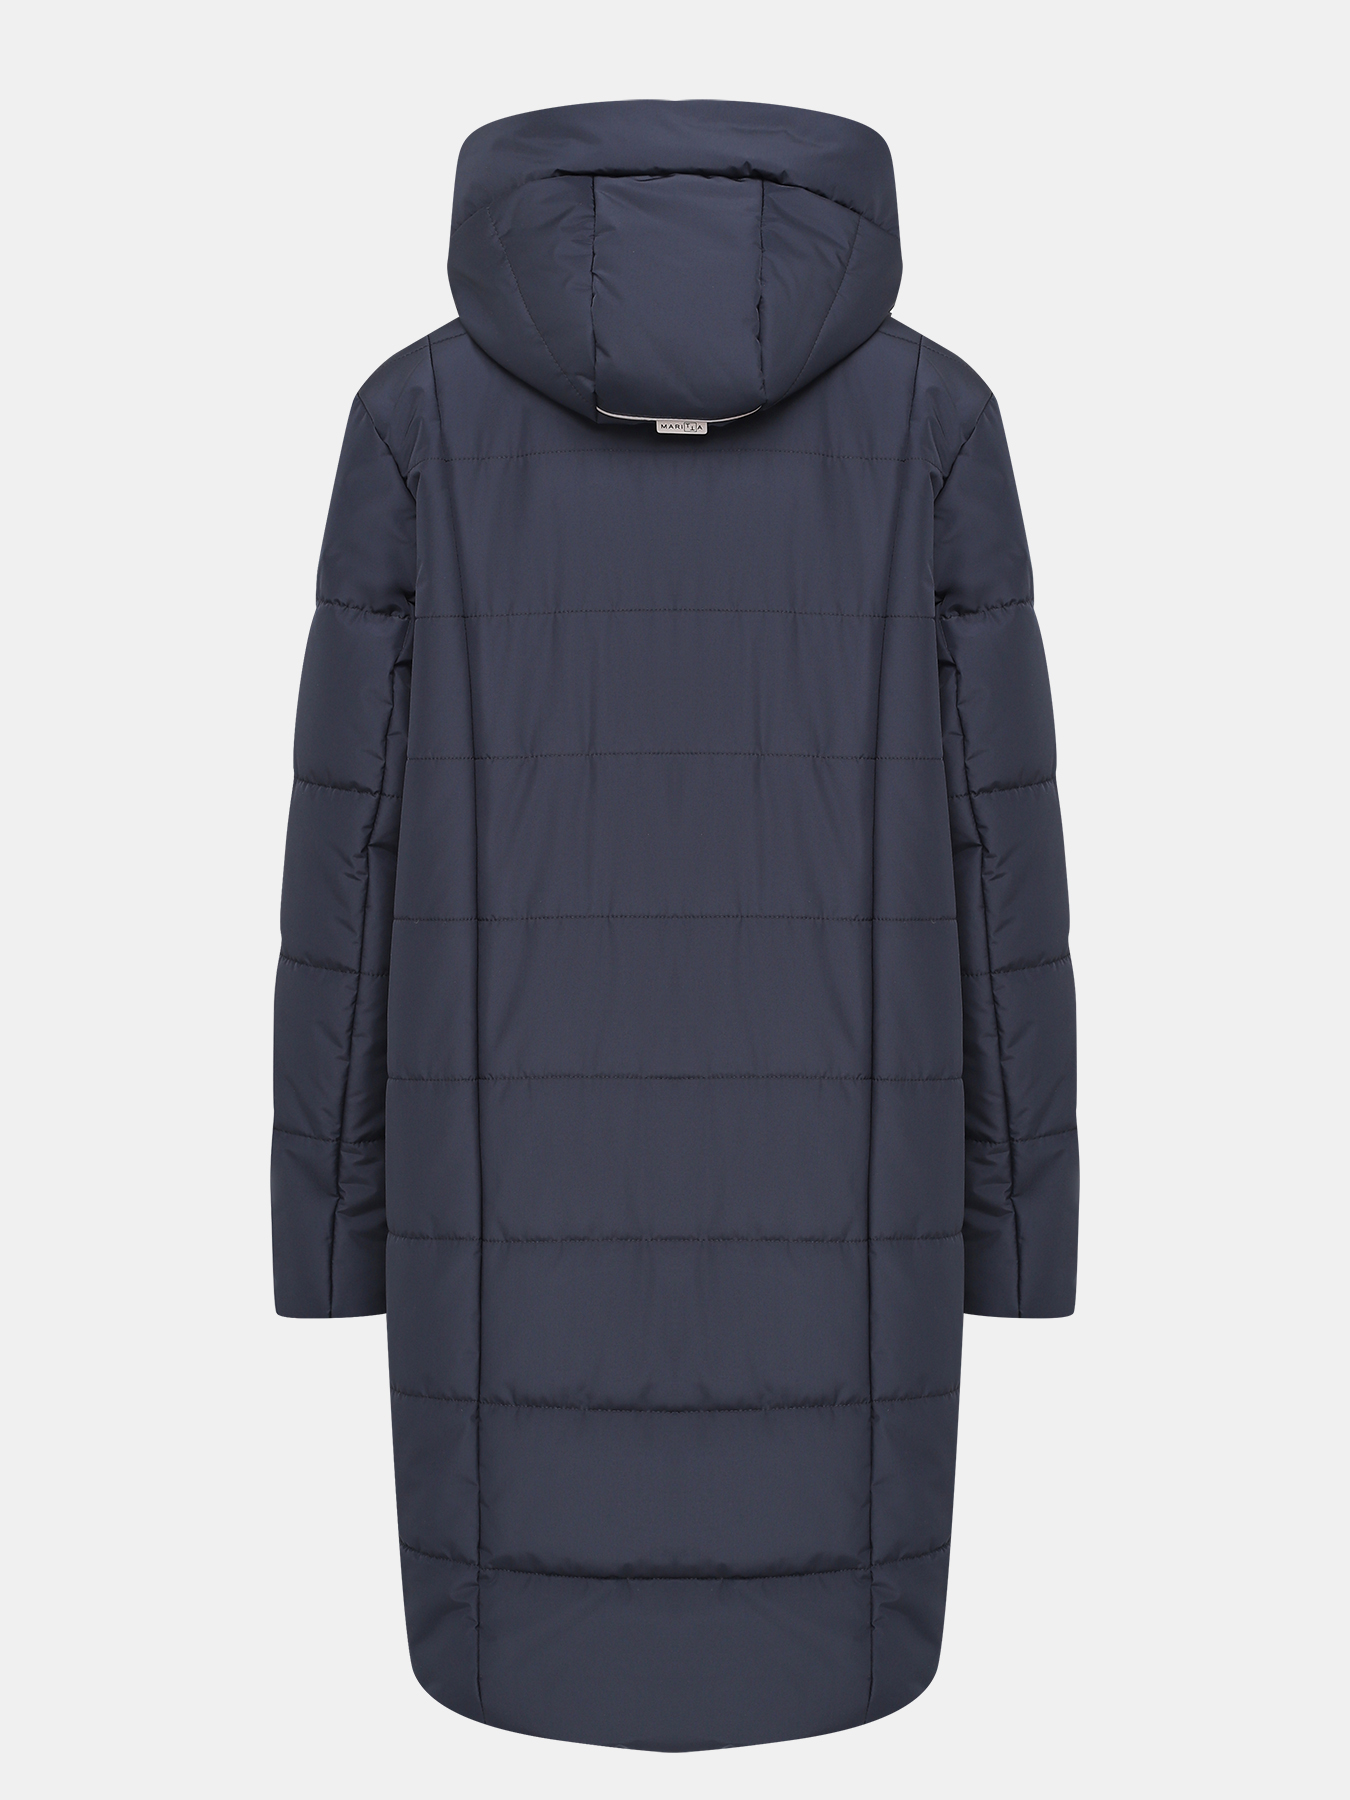 Пальто зимнее Maritta 433548-022, цвет темно-синий, размер 48 - фото 5